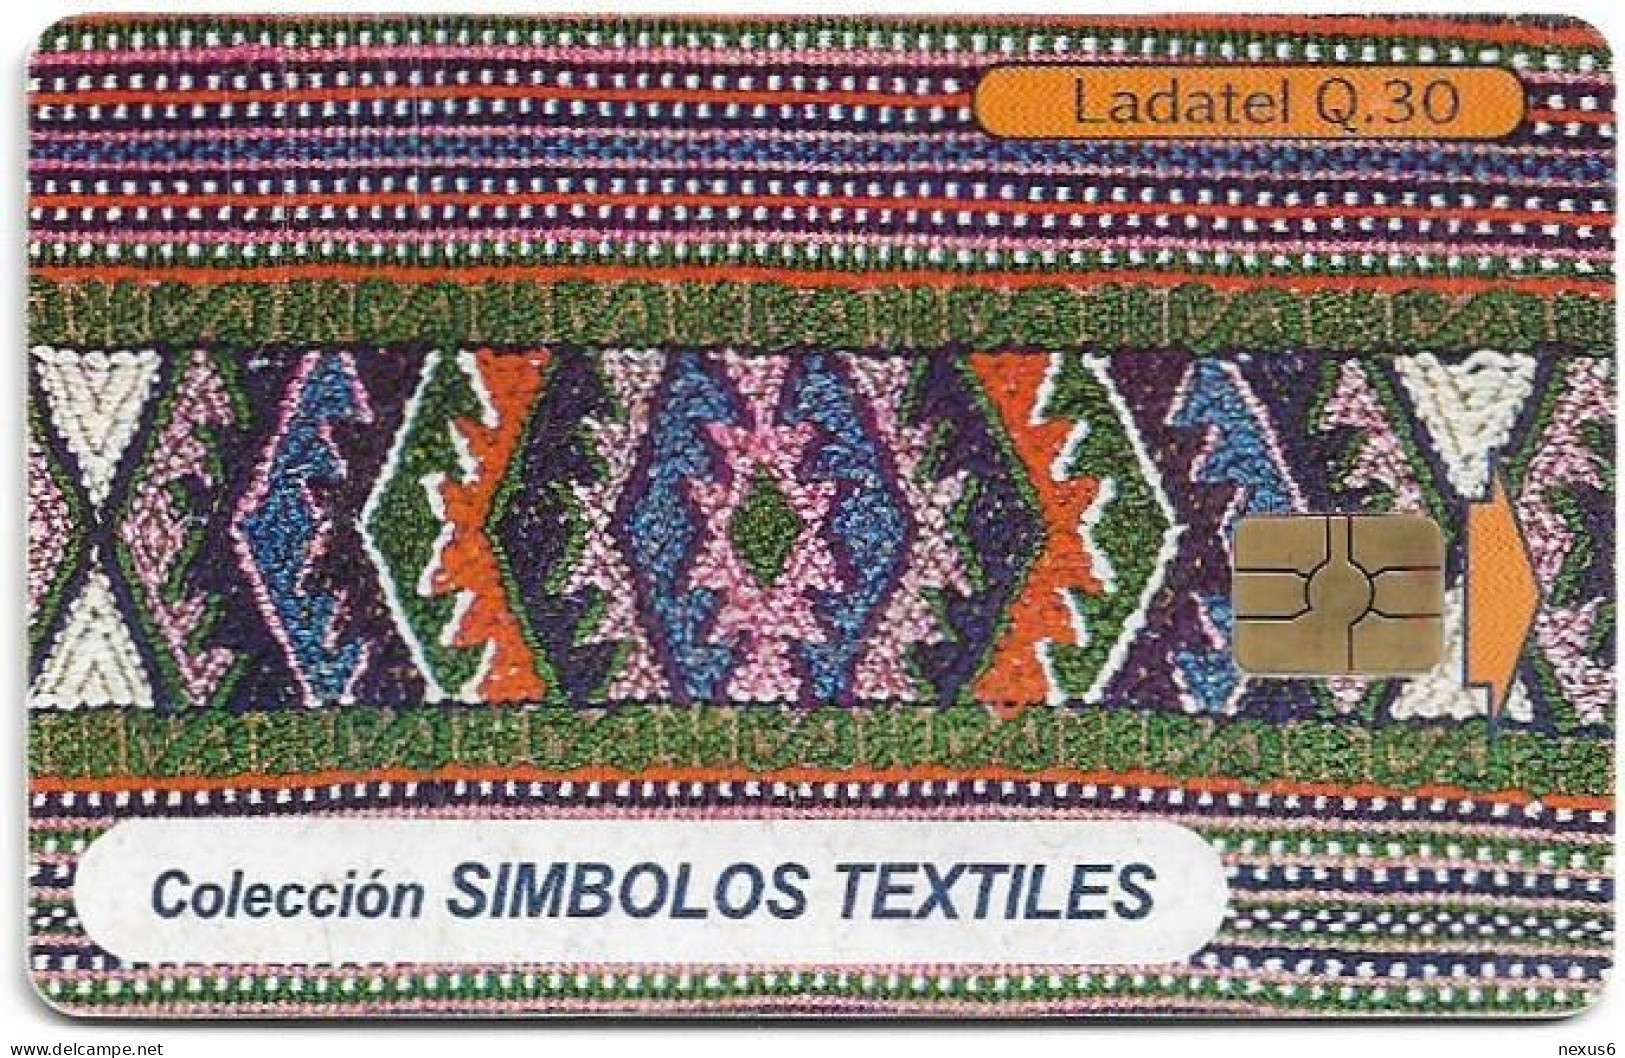 Guatemala - Telgua Ladatel - Simbolos Textiles Pattern 5/5, Gem5 Red, 2003, 30Q, Used - Guatemala